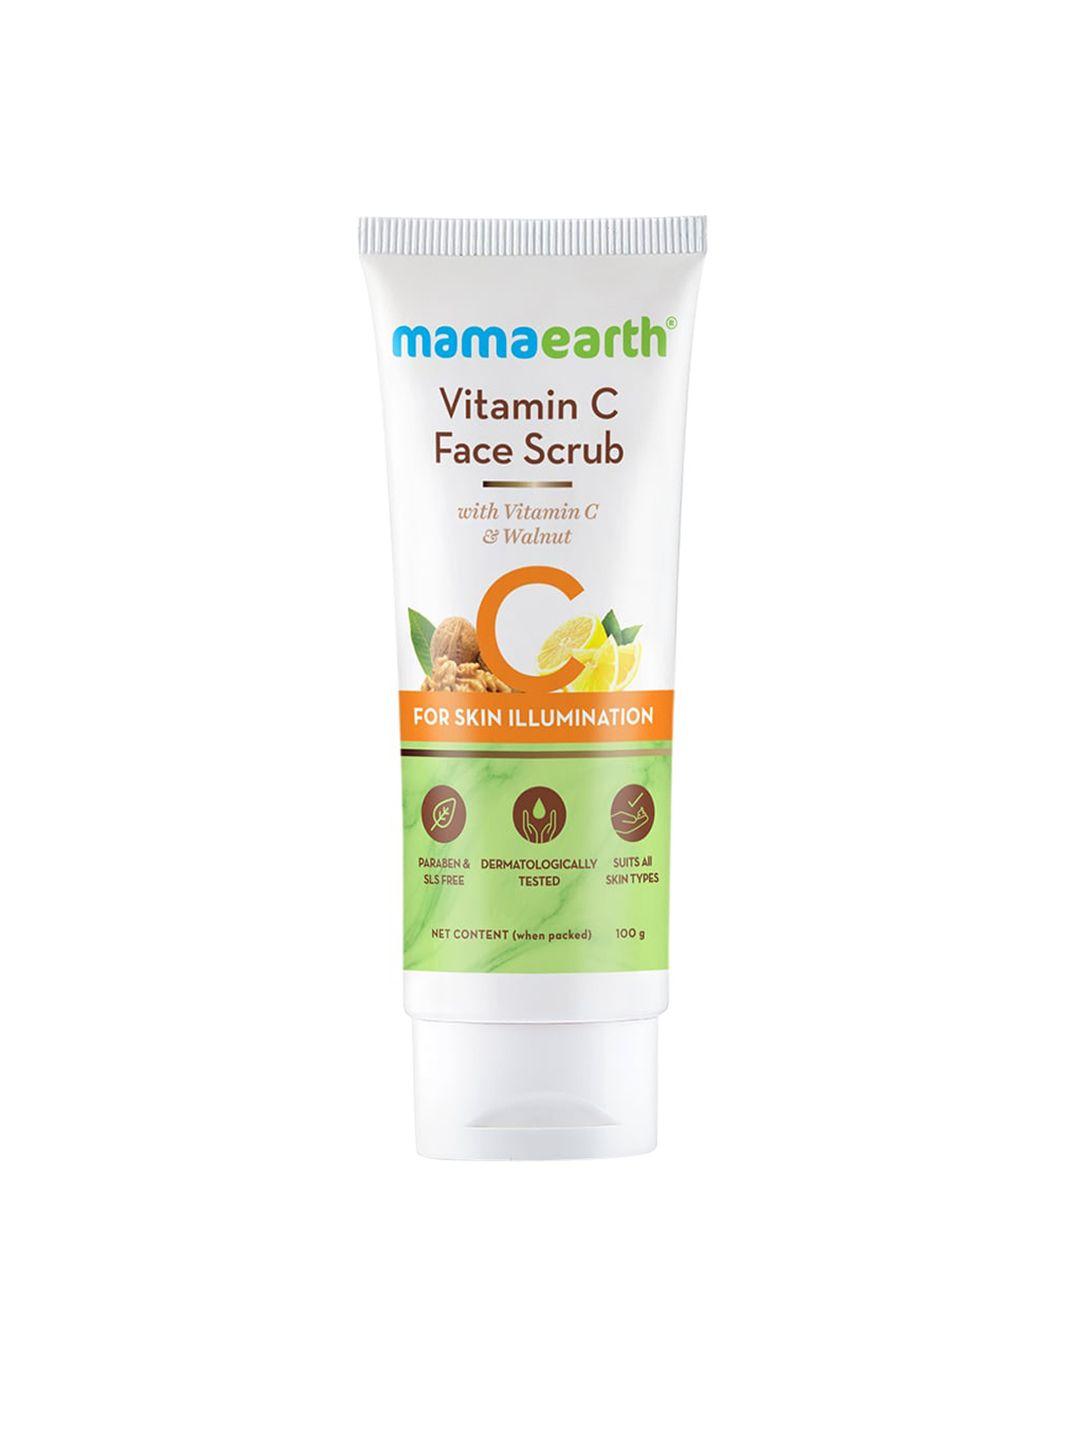 mamaearth vitamin c face scrub for glowing skin, with walnut for skin illumination 100g